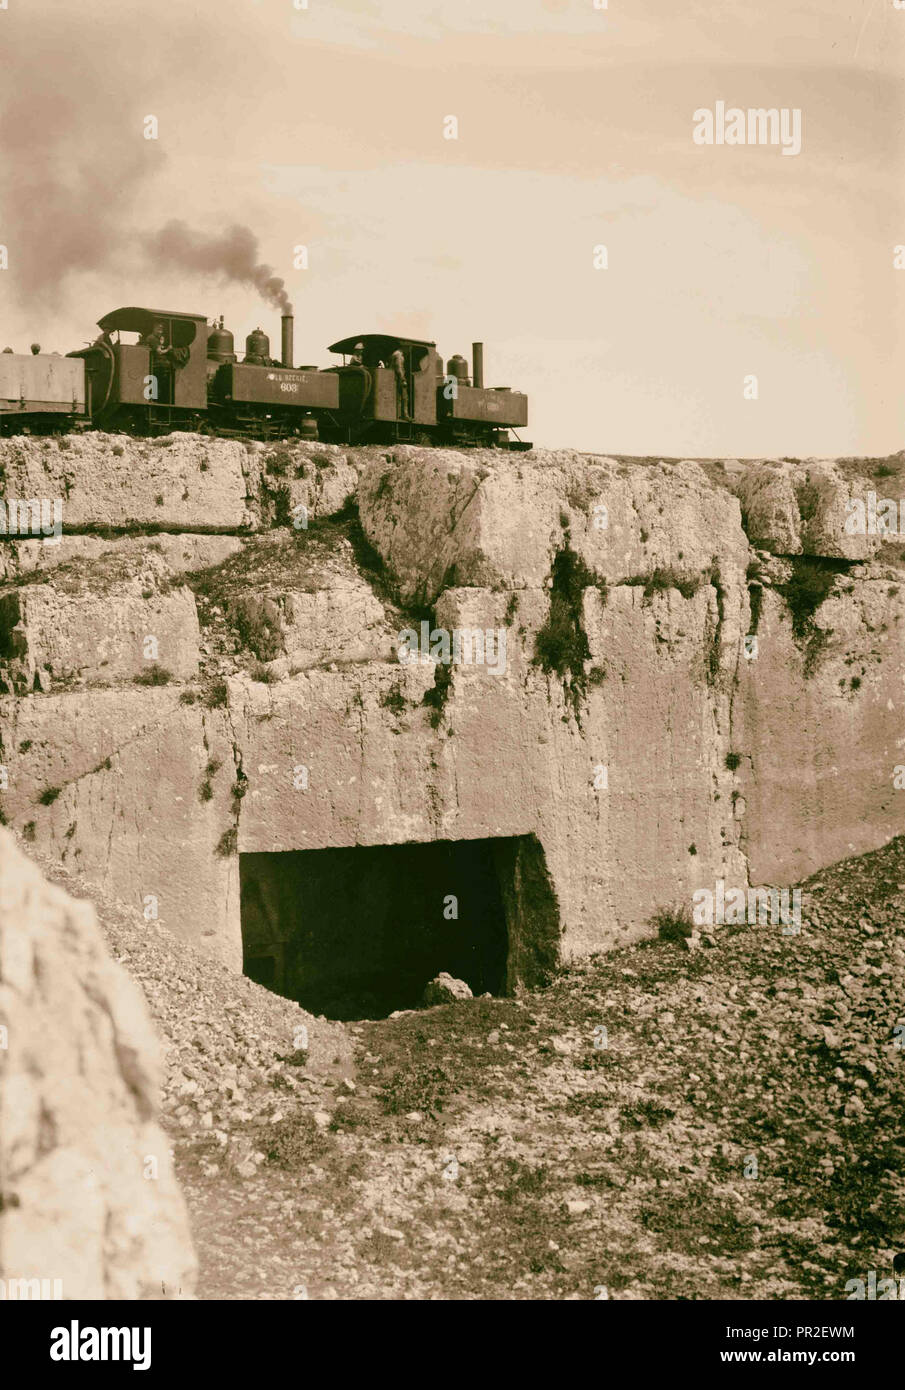 Divers résultats de la guerre light railway crossing over tombes anciennes. 1918, Jérusalem, Israël Banque D'Images